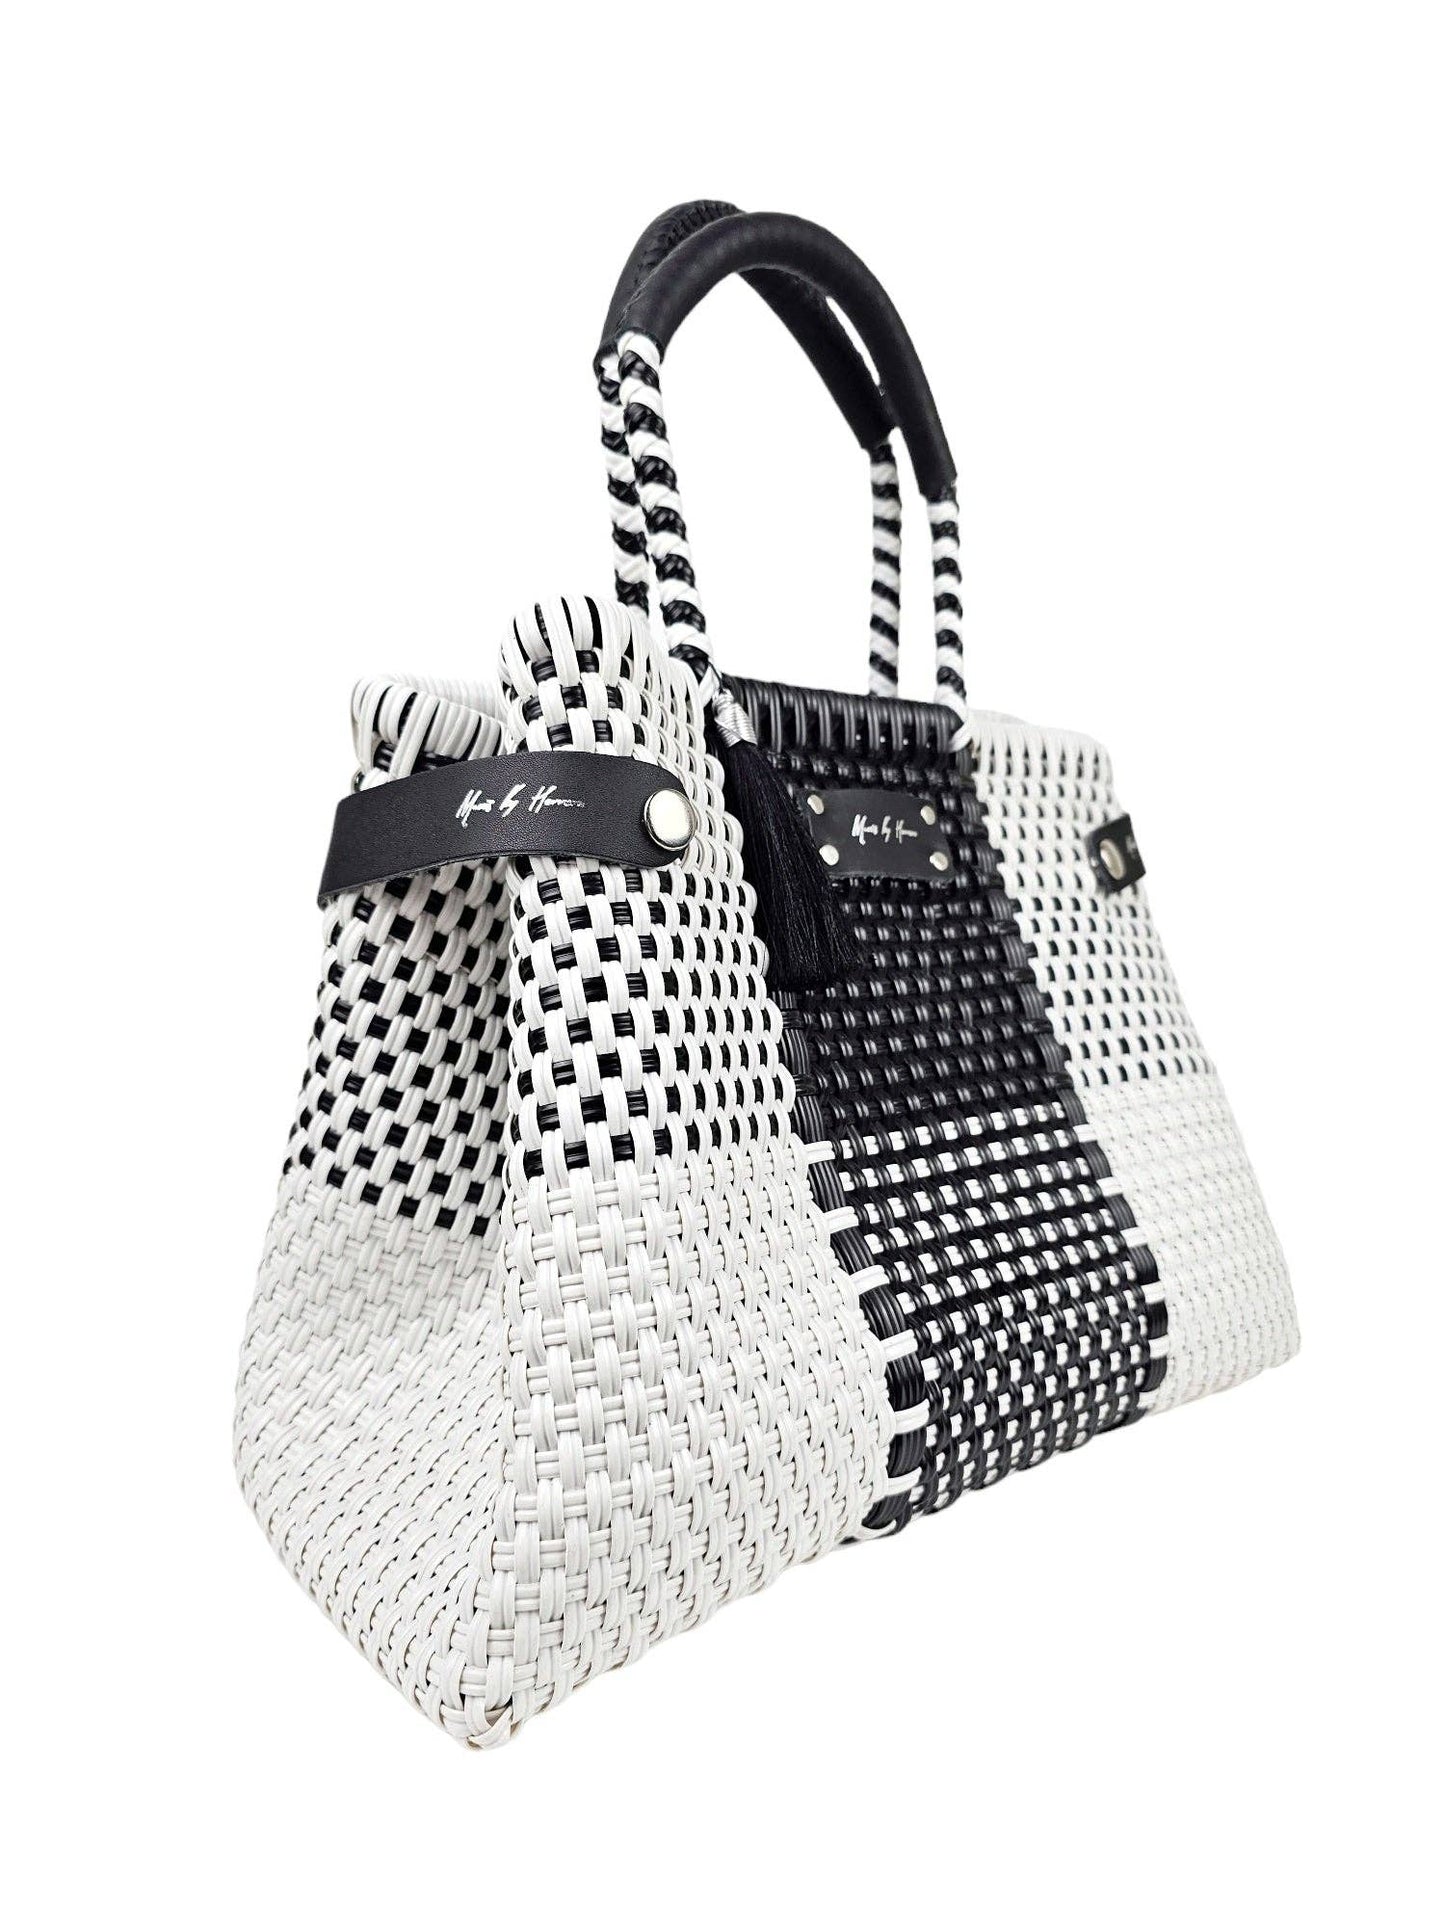 Mavis by Herrera - Less Pollution Convertible Handbag - Black & White